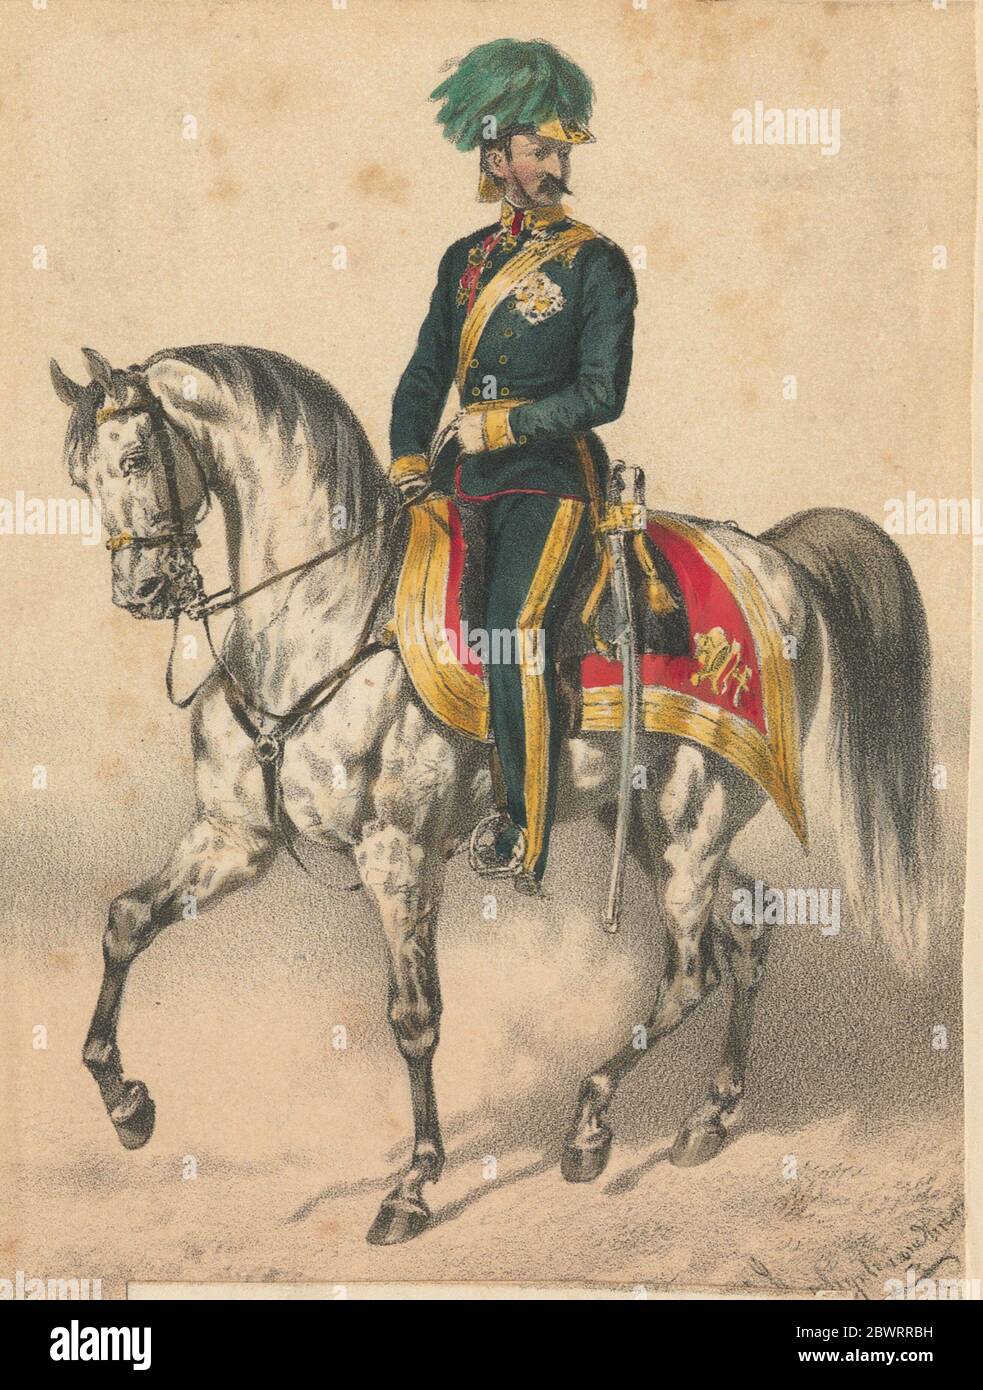 General-Adjutant S-r K.k. Apost. Majestät. 1866. Vinkhuijzen, Hendrik Jacobus (Collector) Strassgschwandtner, Joseph Anton (1826-1881) (Artist). The Stock Photo